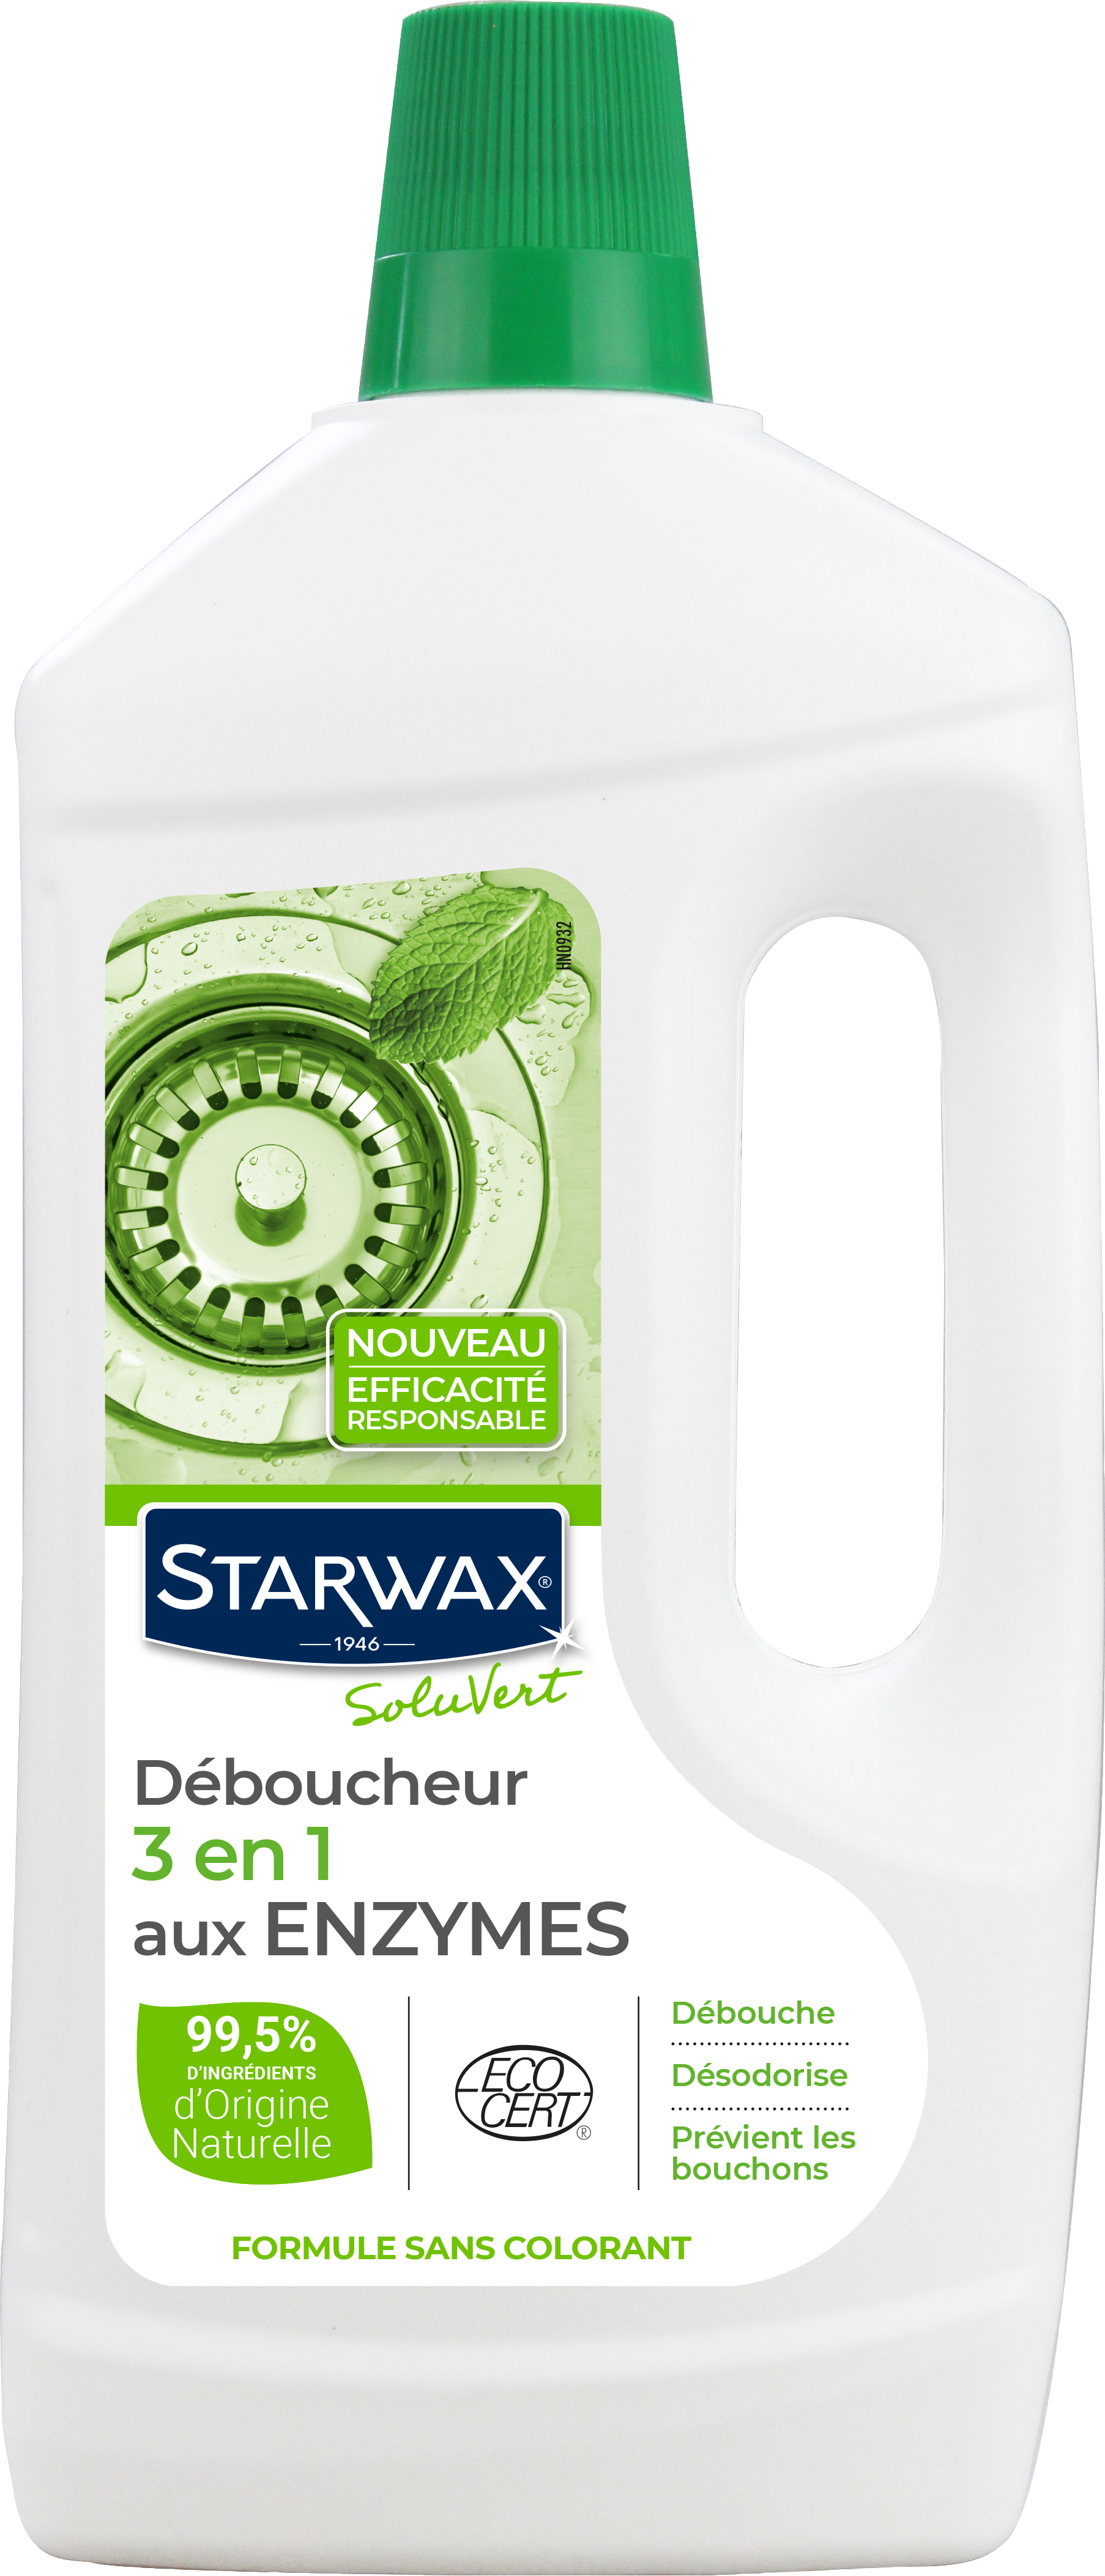 STARWAX Deboucheur special wc - 1l - Cdiscount Au quotidien